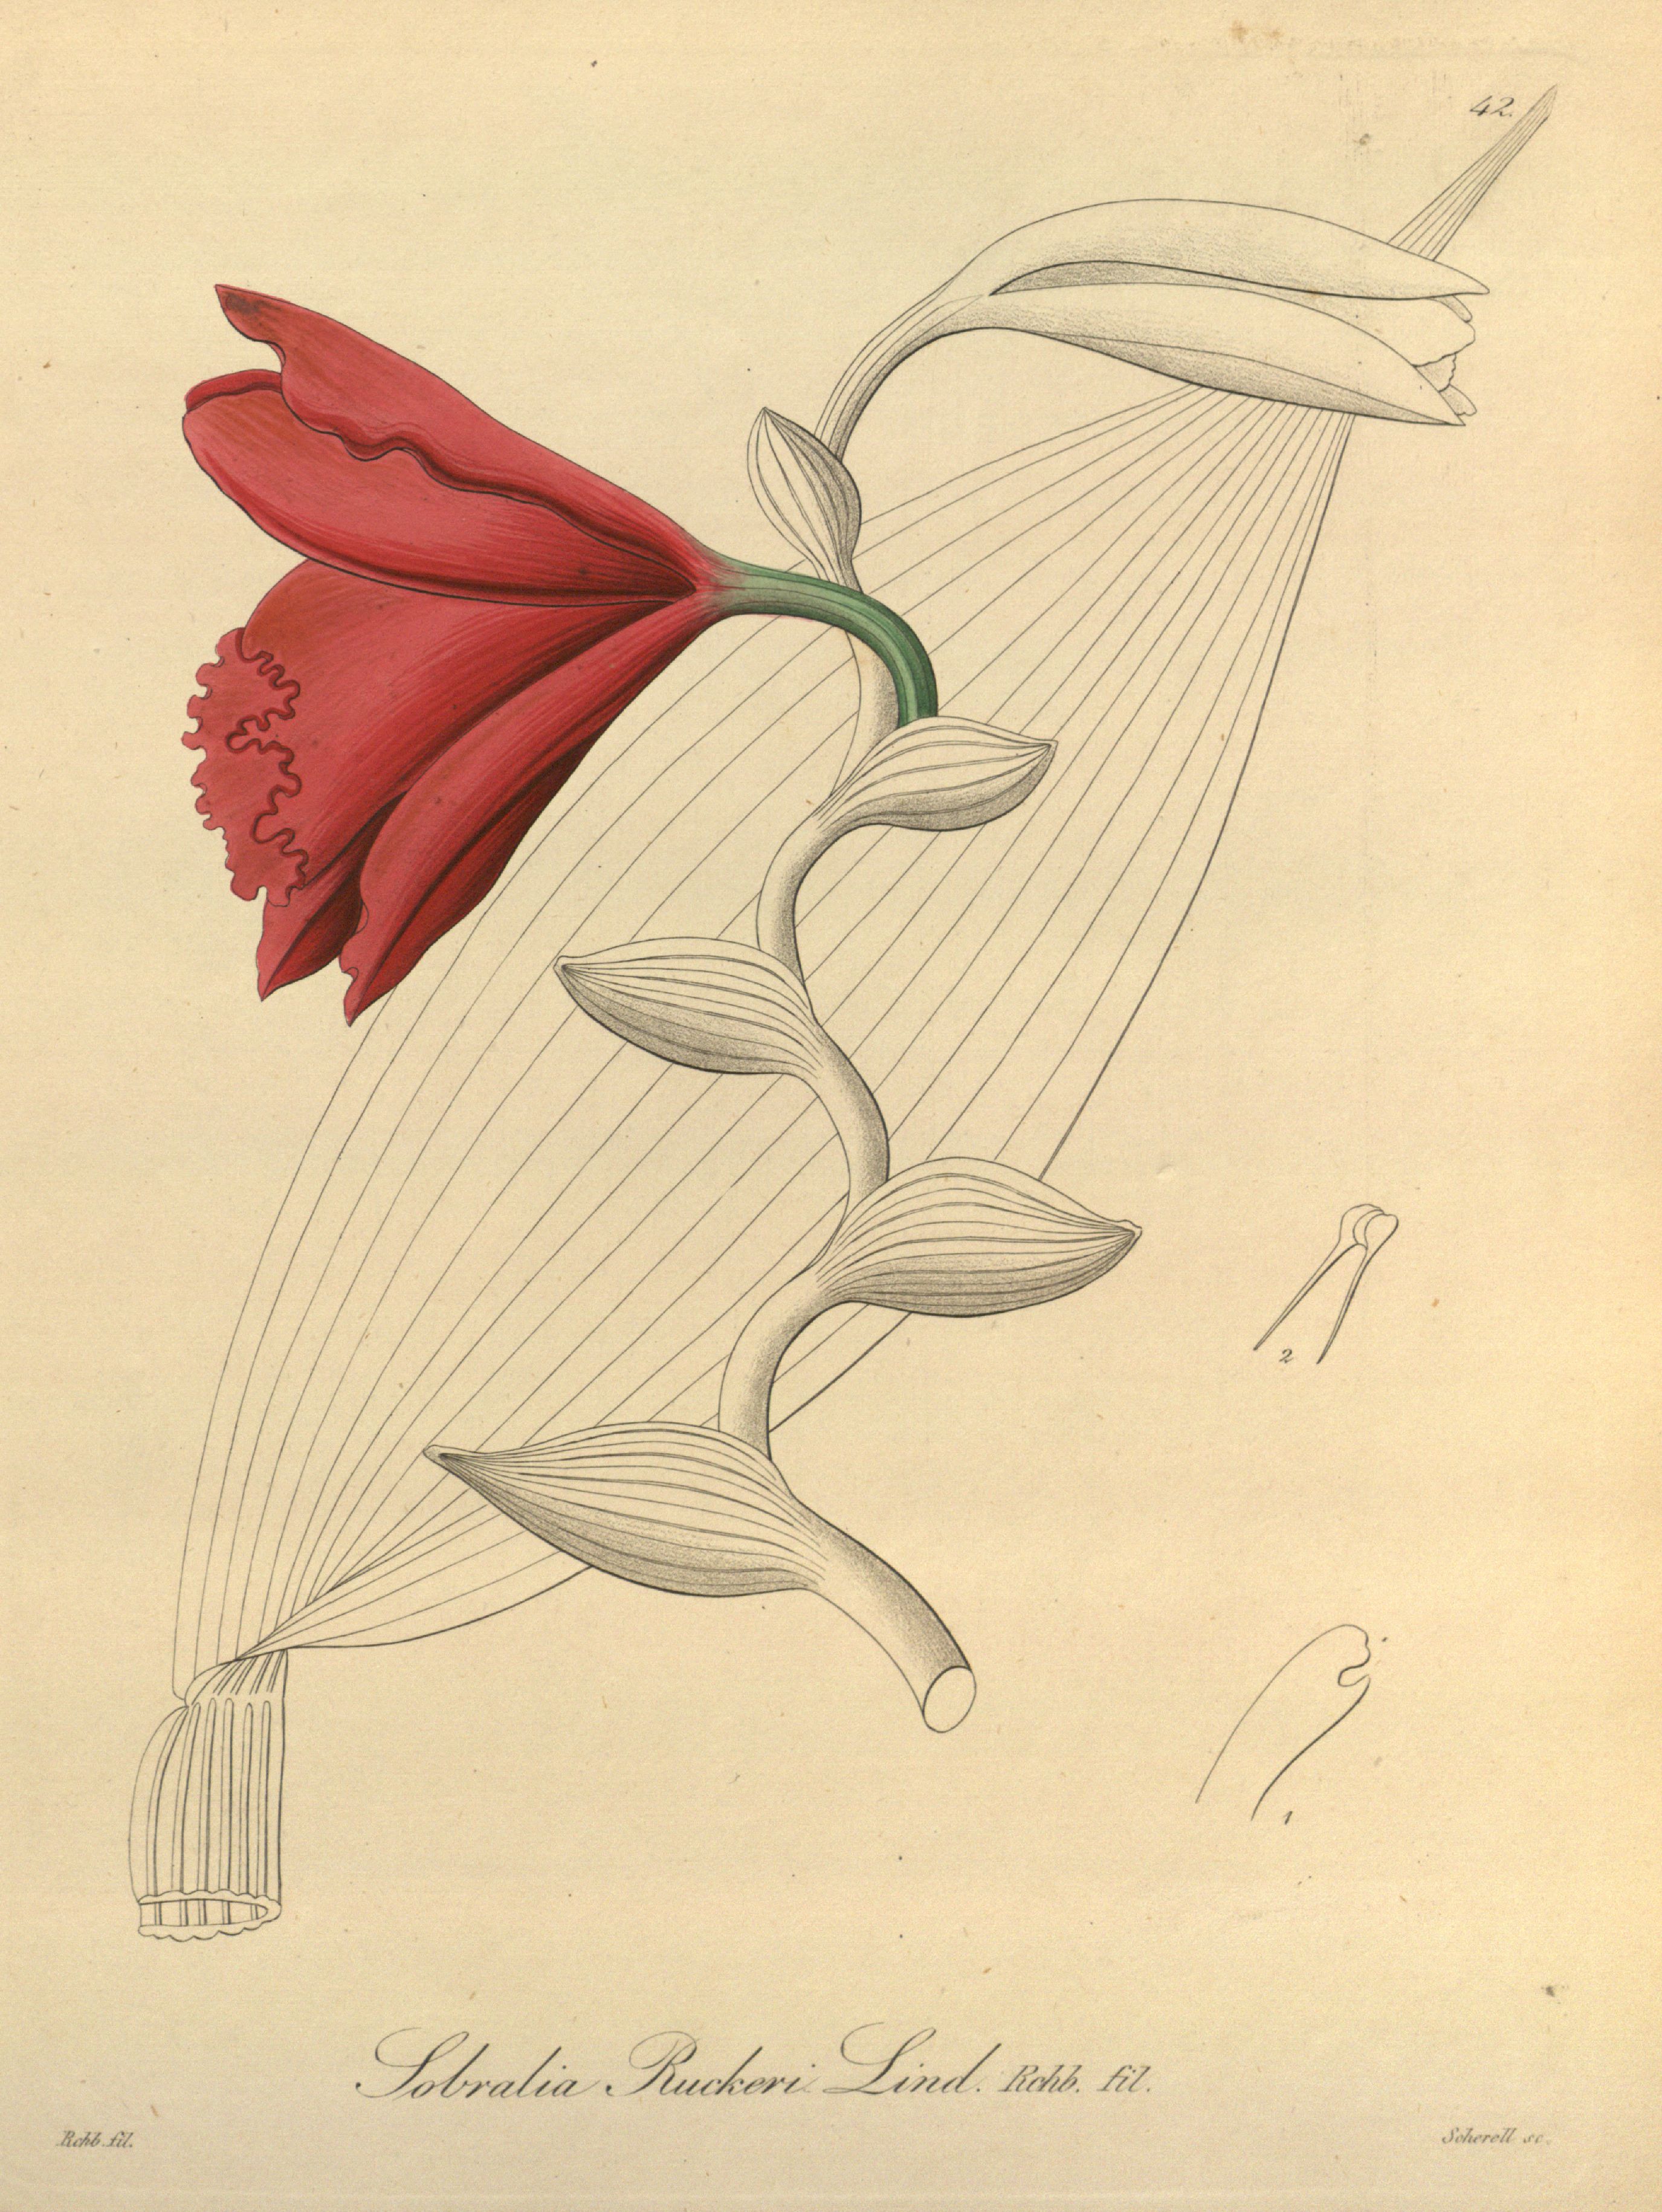 Sobralia ruckeri-Xenia 1 fig 42 (1858)